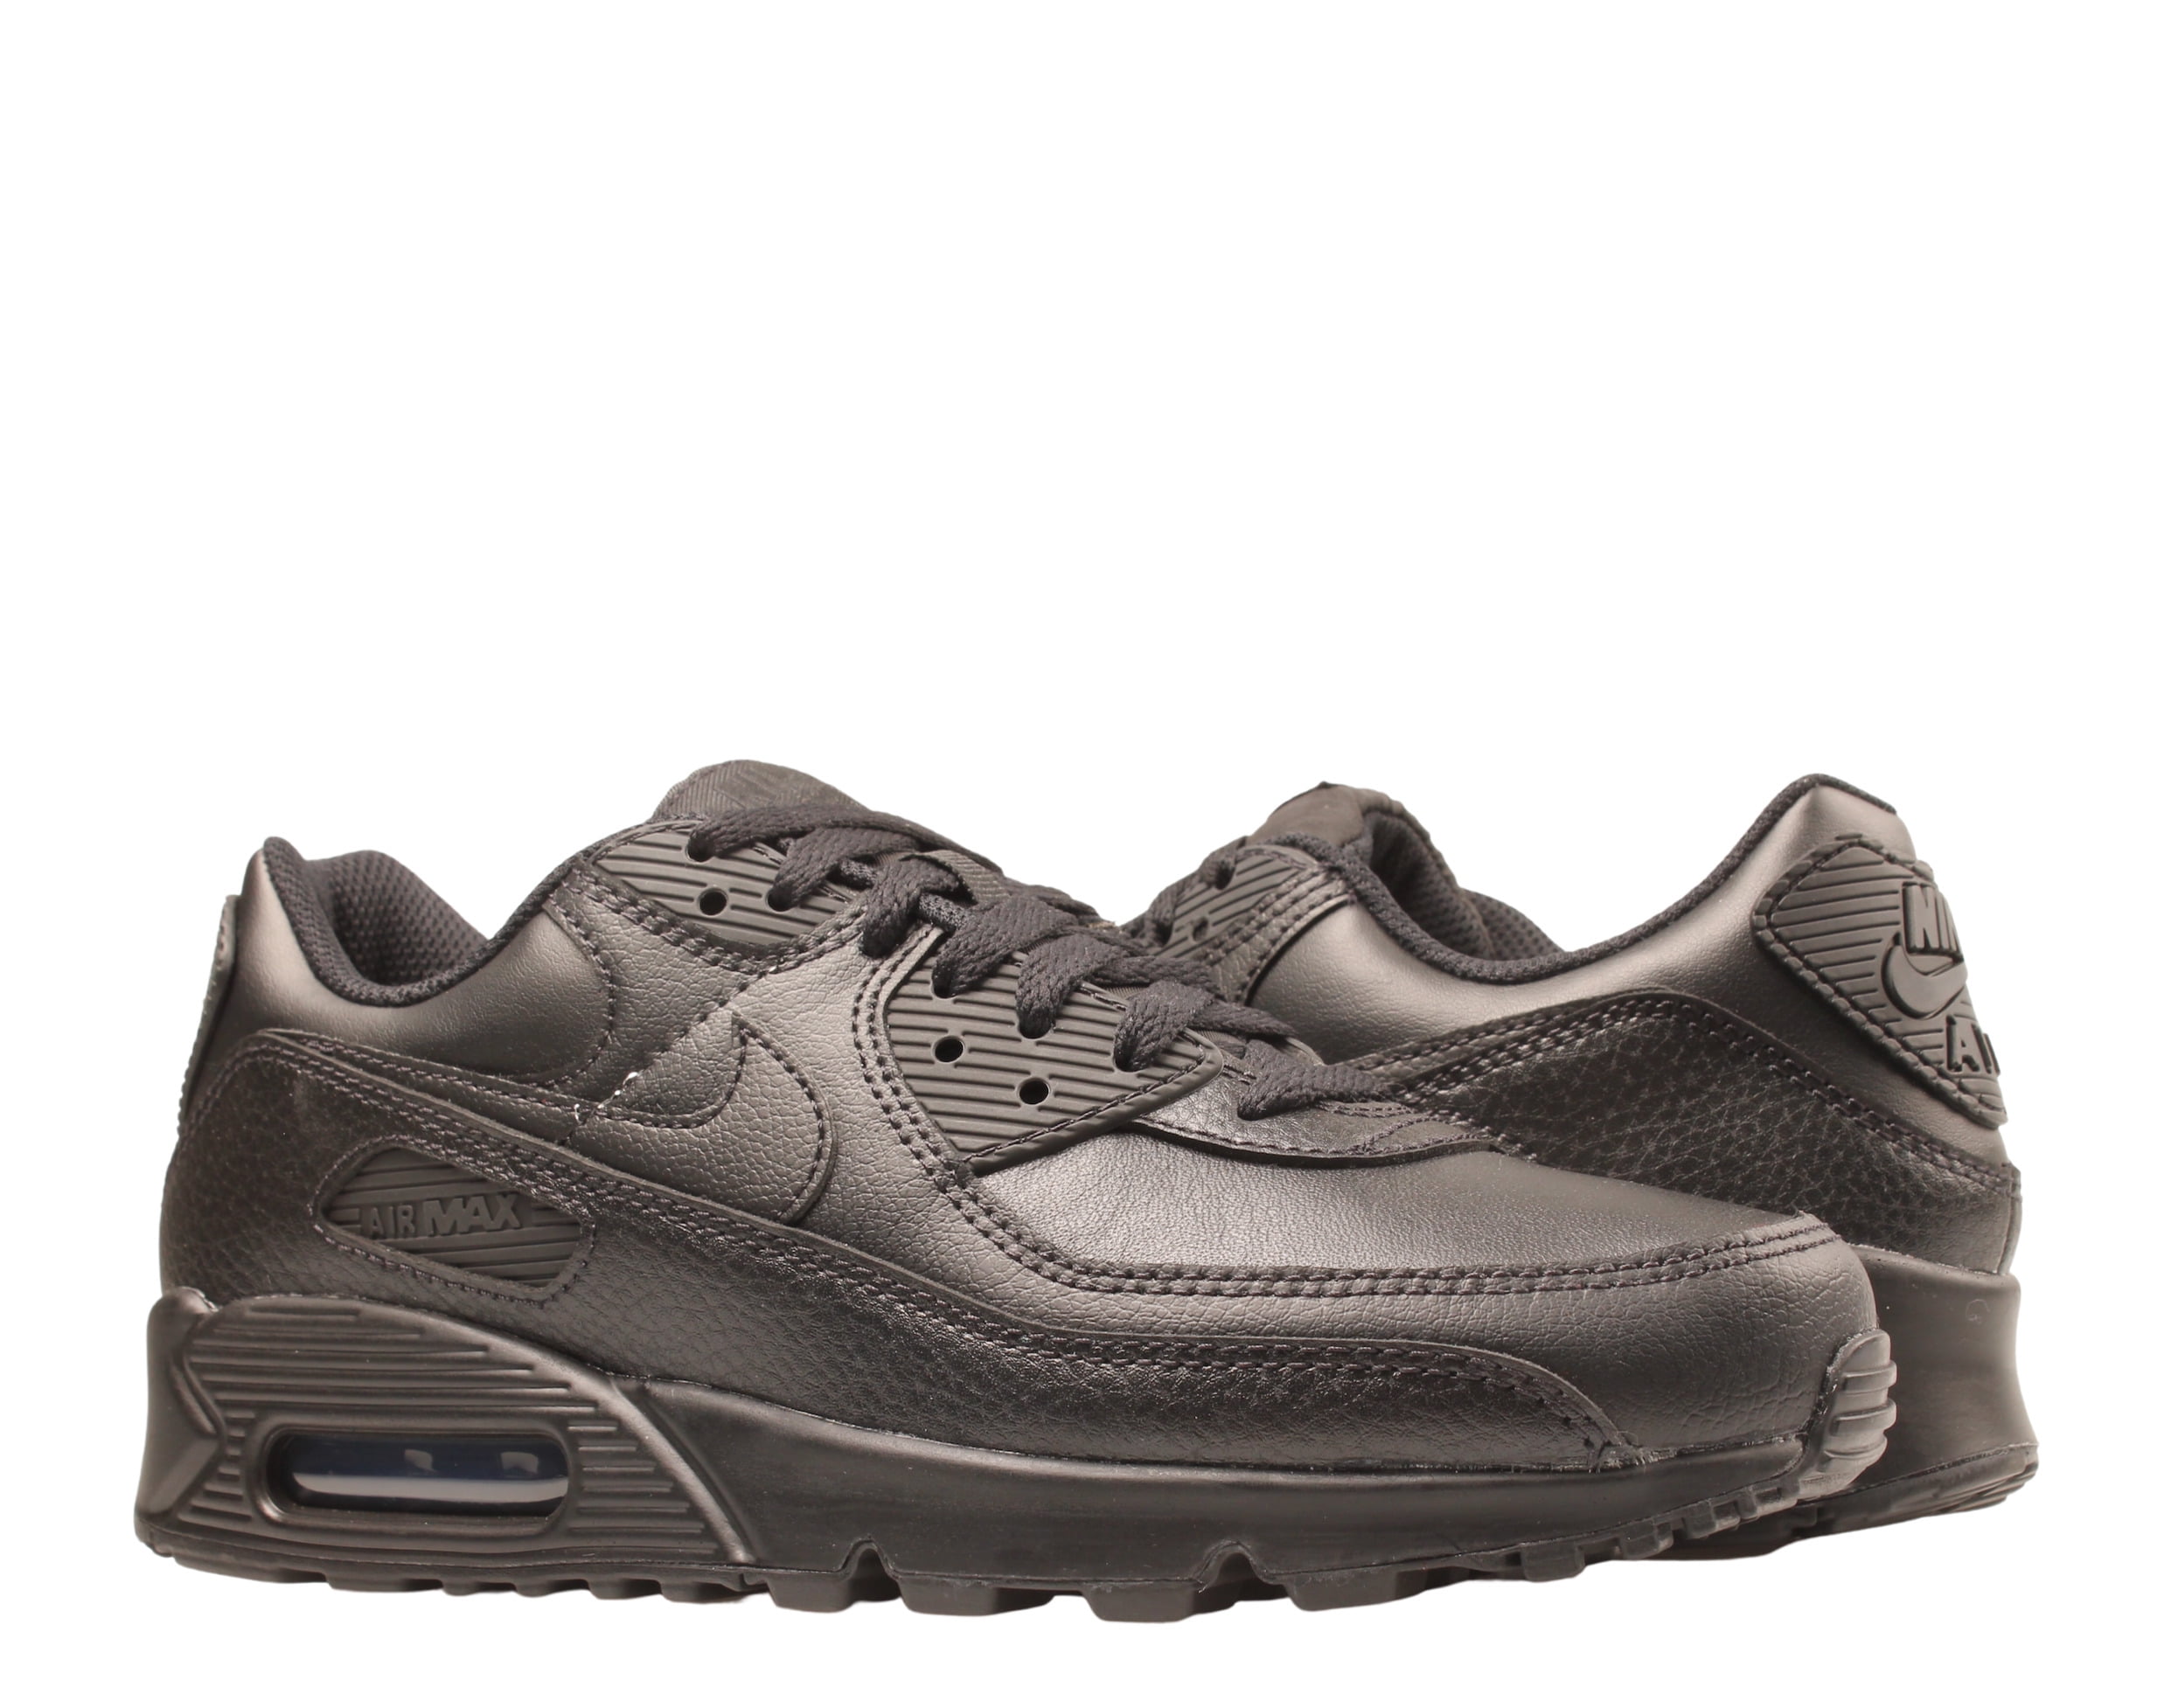 Nike - Nike Air Max 90 Leather Black/Black-Black Men's Running Shoes CZ5594-001 - Walmart.com